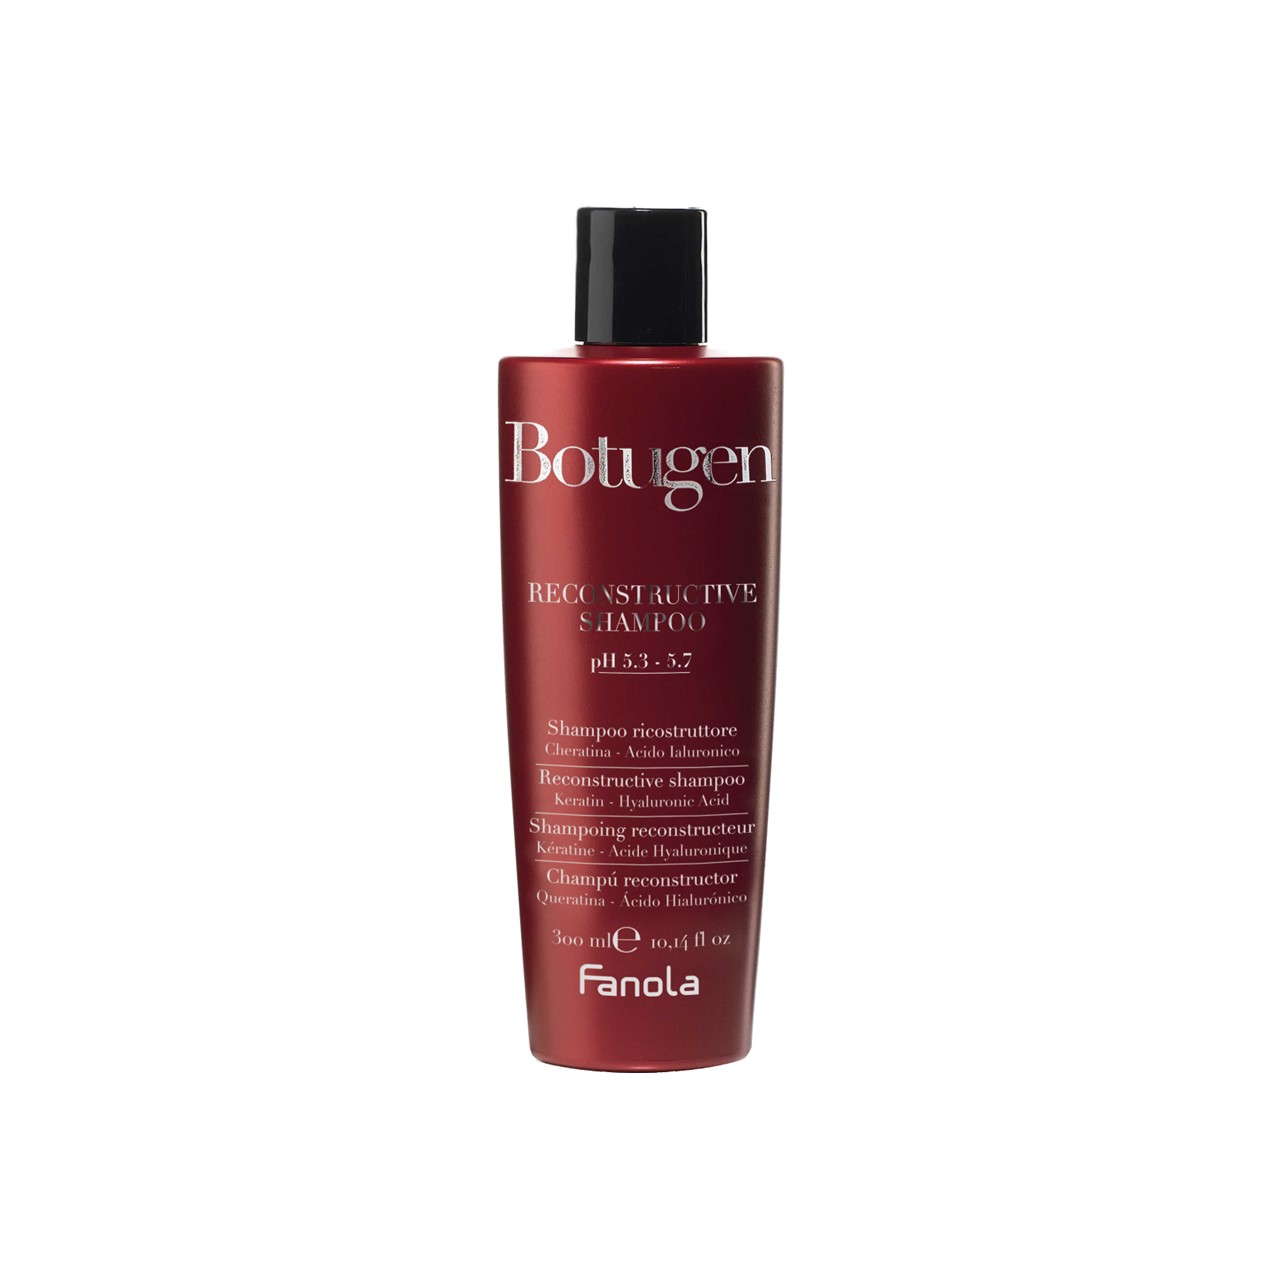 Fanola Botugen Reconstructive Shampoo 300ml (10.14 fl oz)